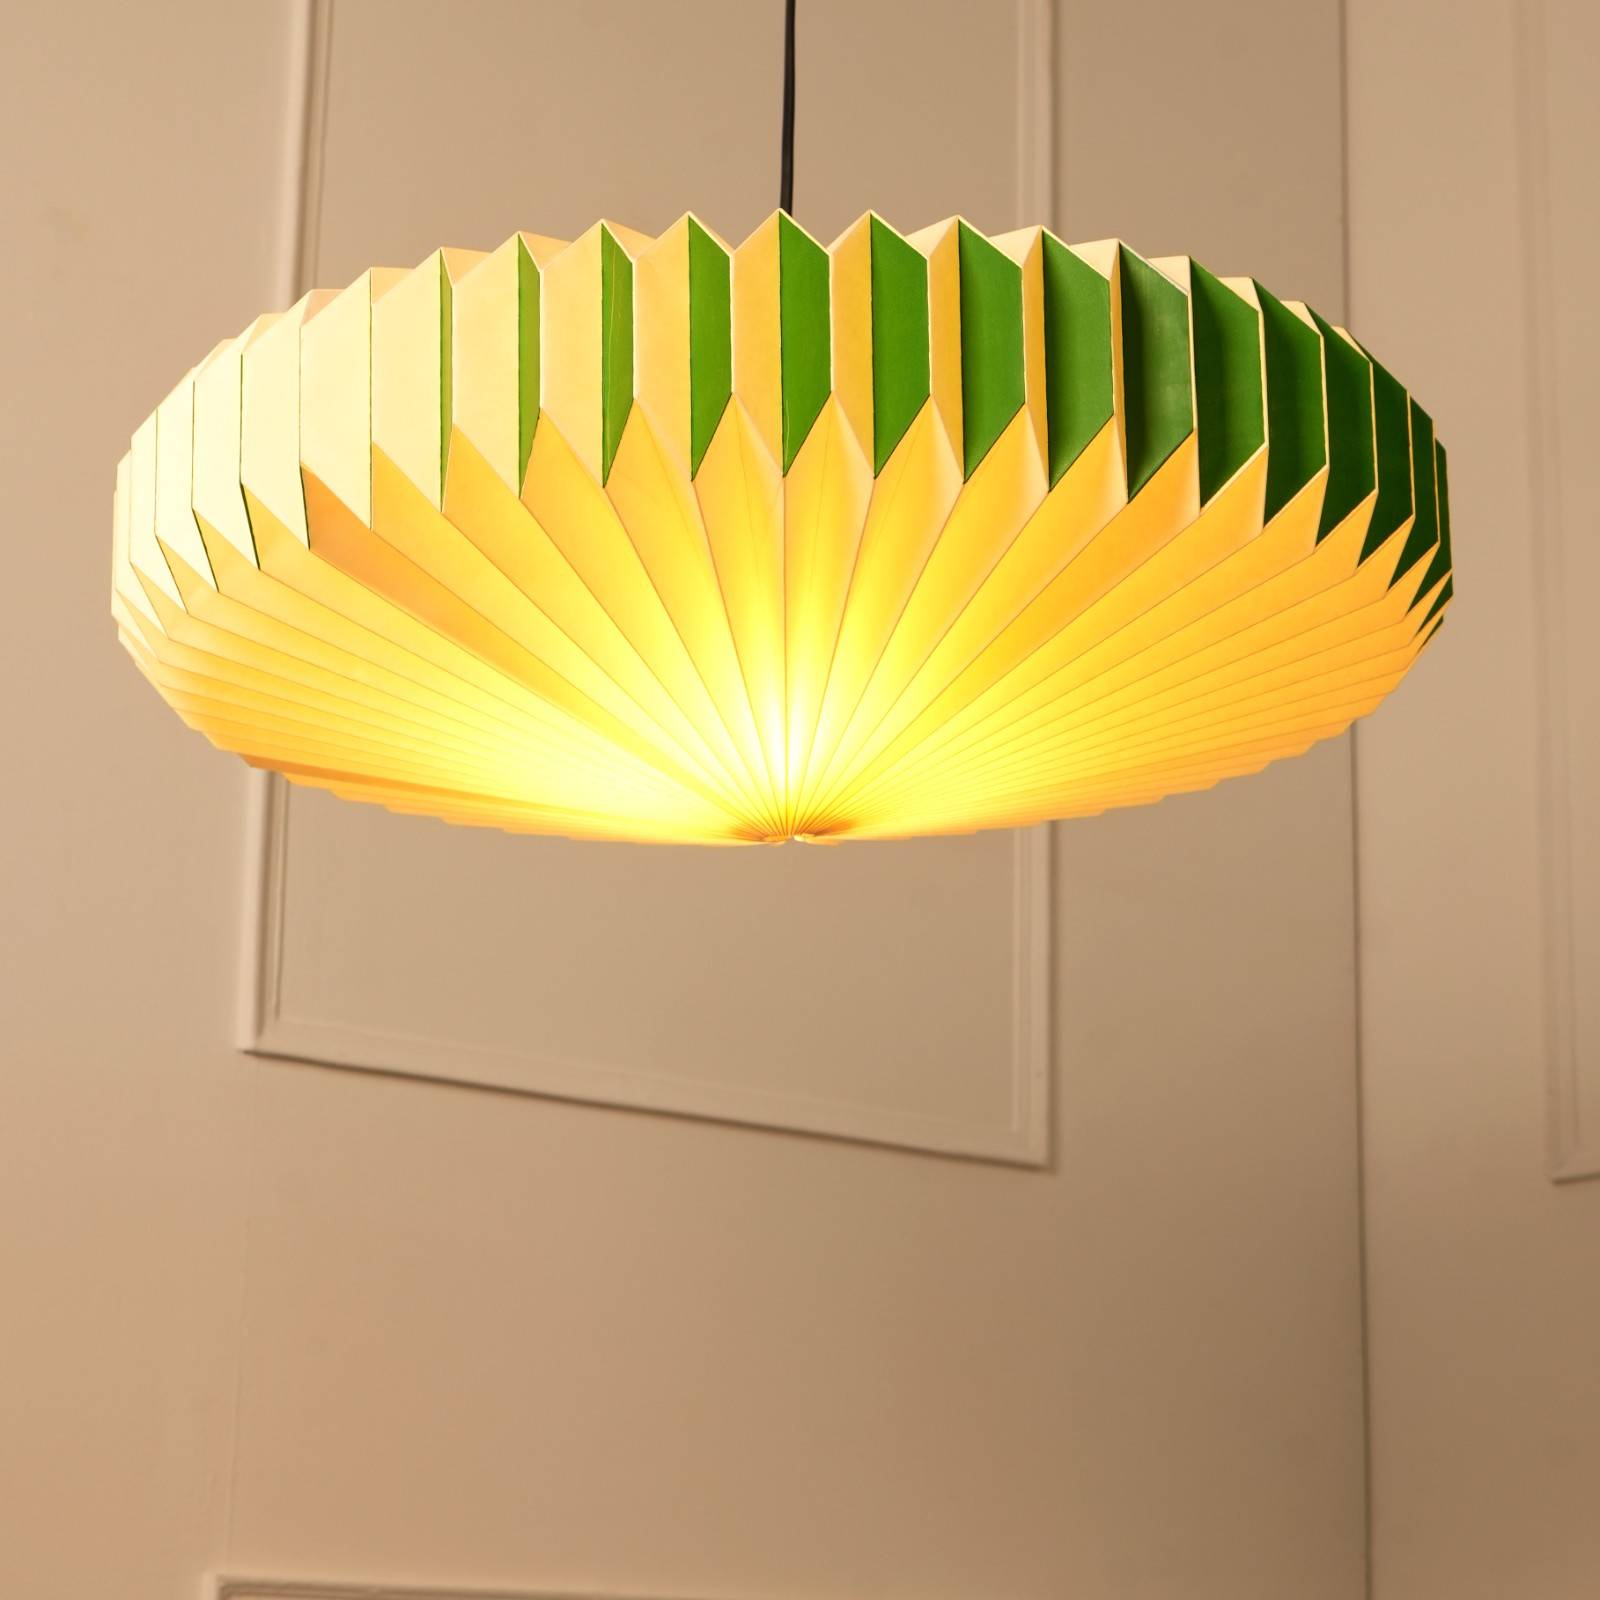 Oblong 2 Parrot Green Lamp